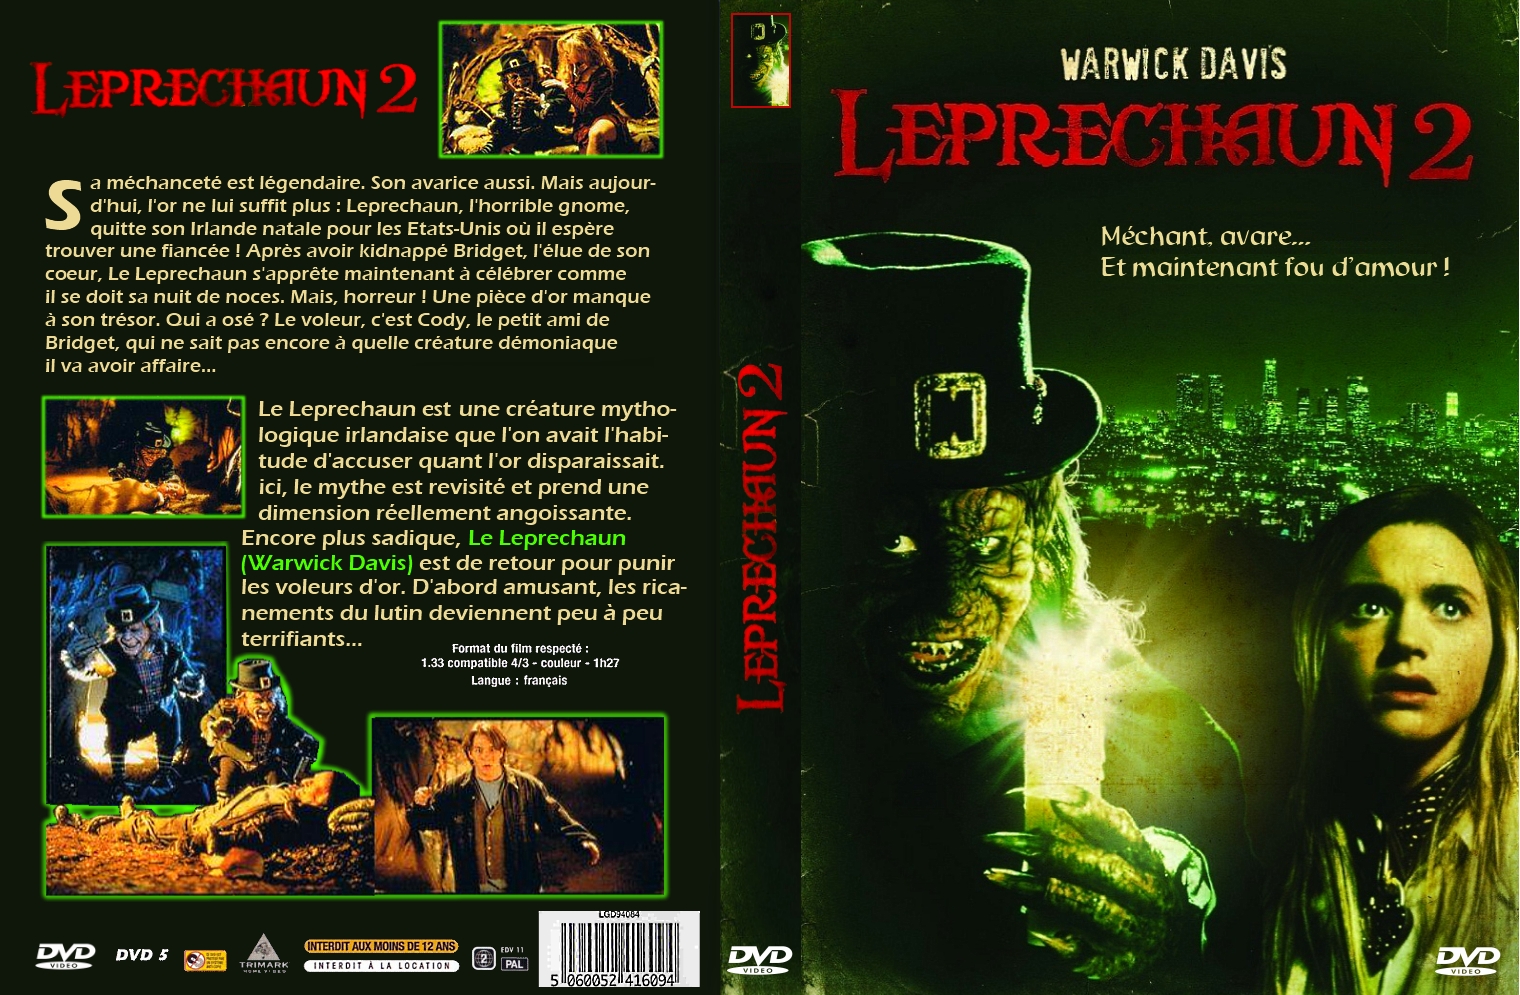 Jaquette DVD Leprechaun 2 custom